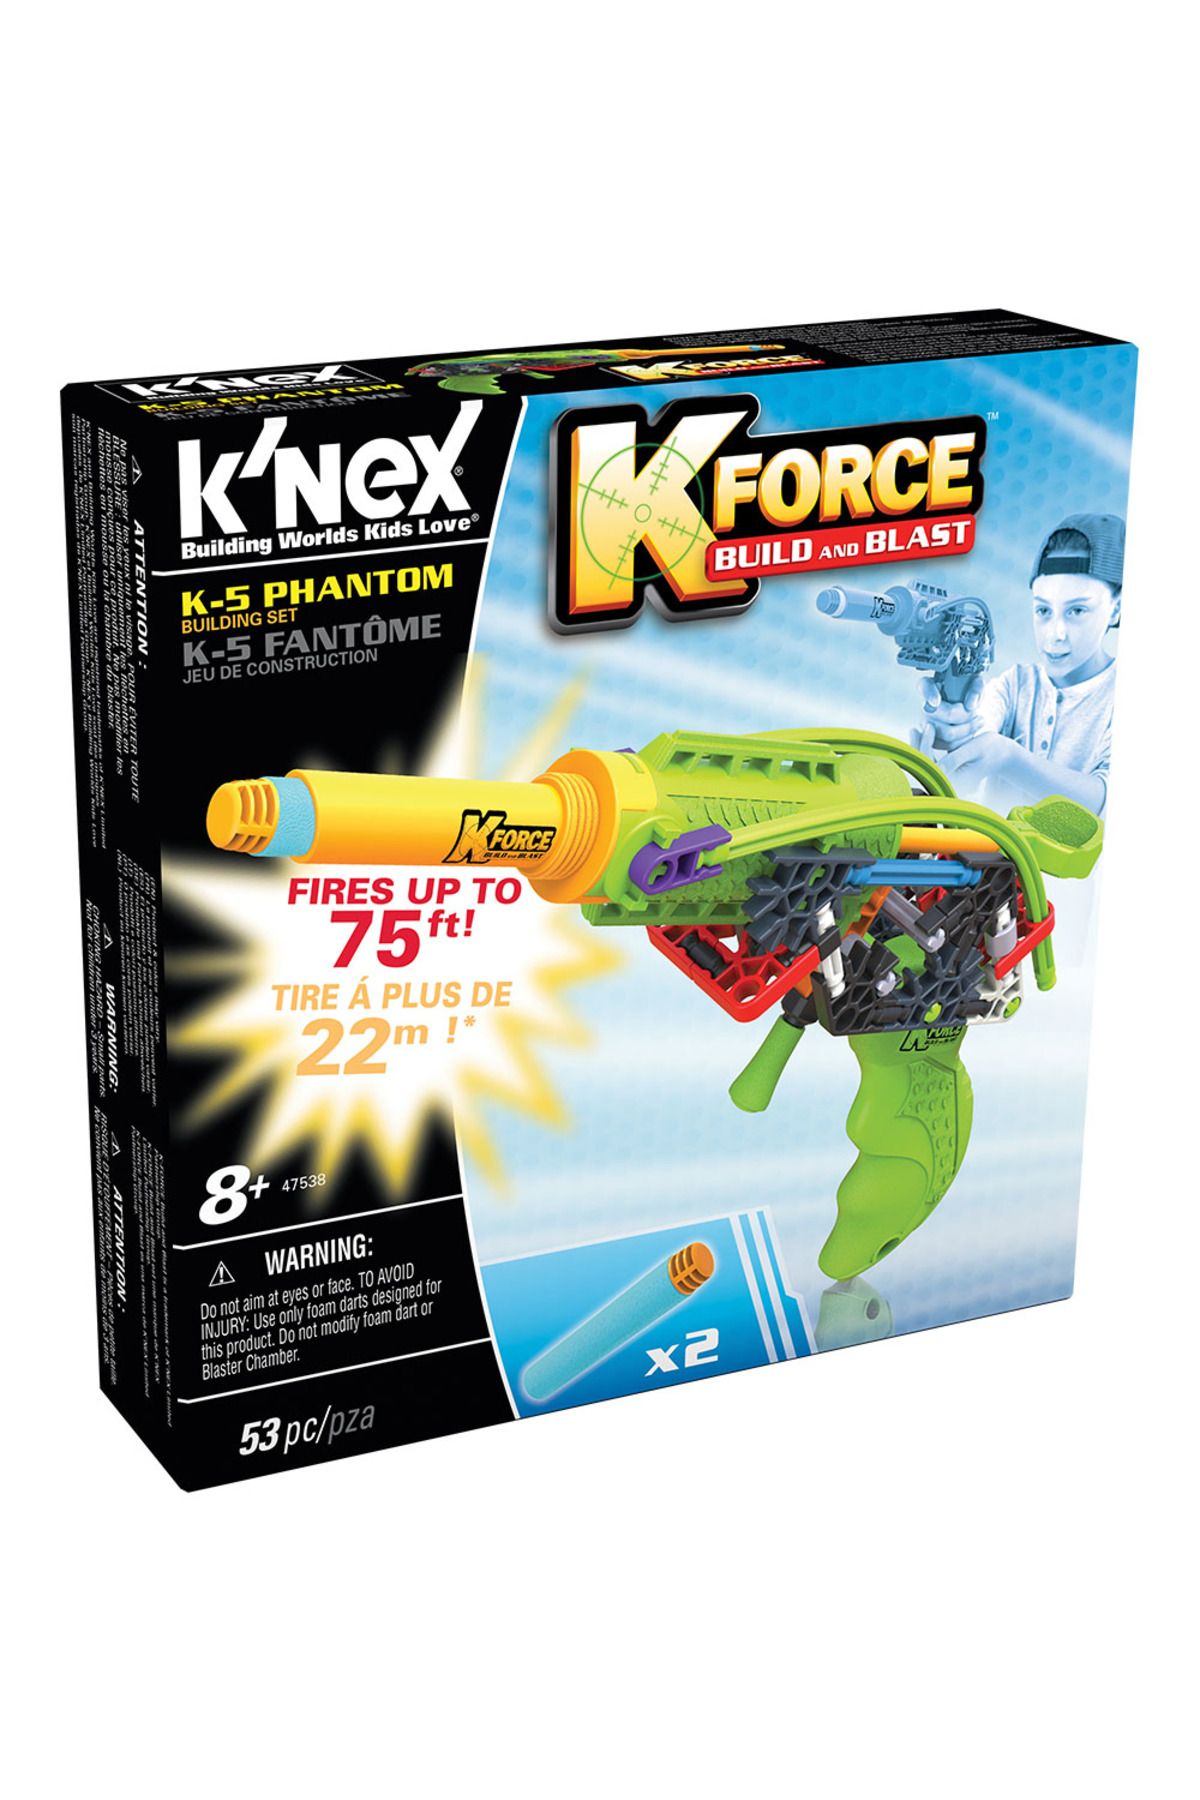 Knex K Nex K-force K-5 Phantom Yapı Seti 47538